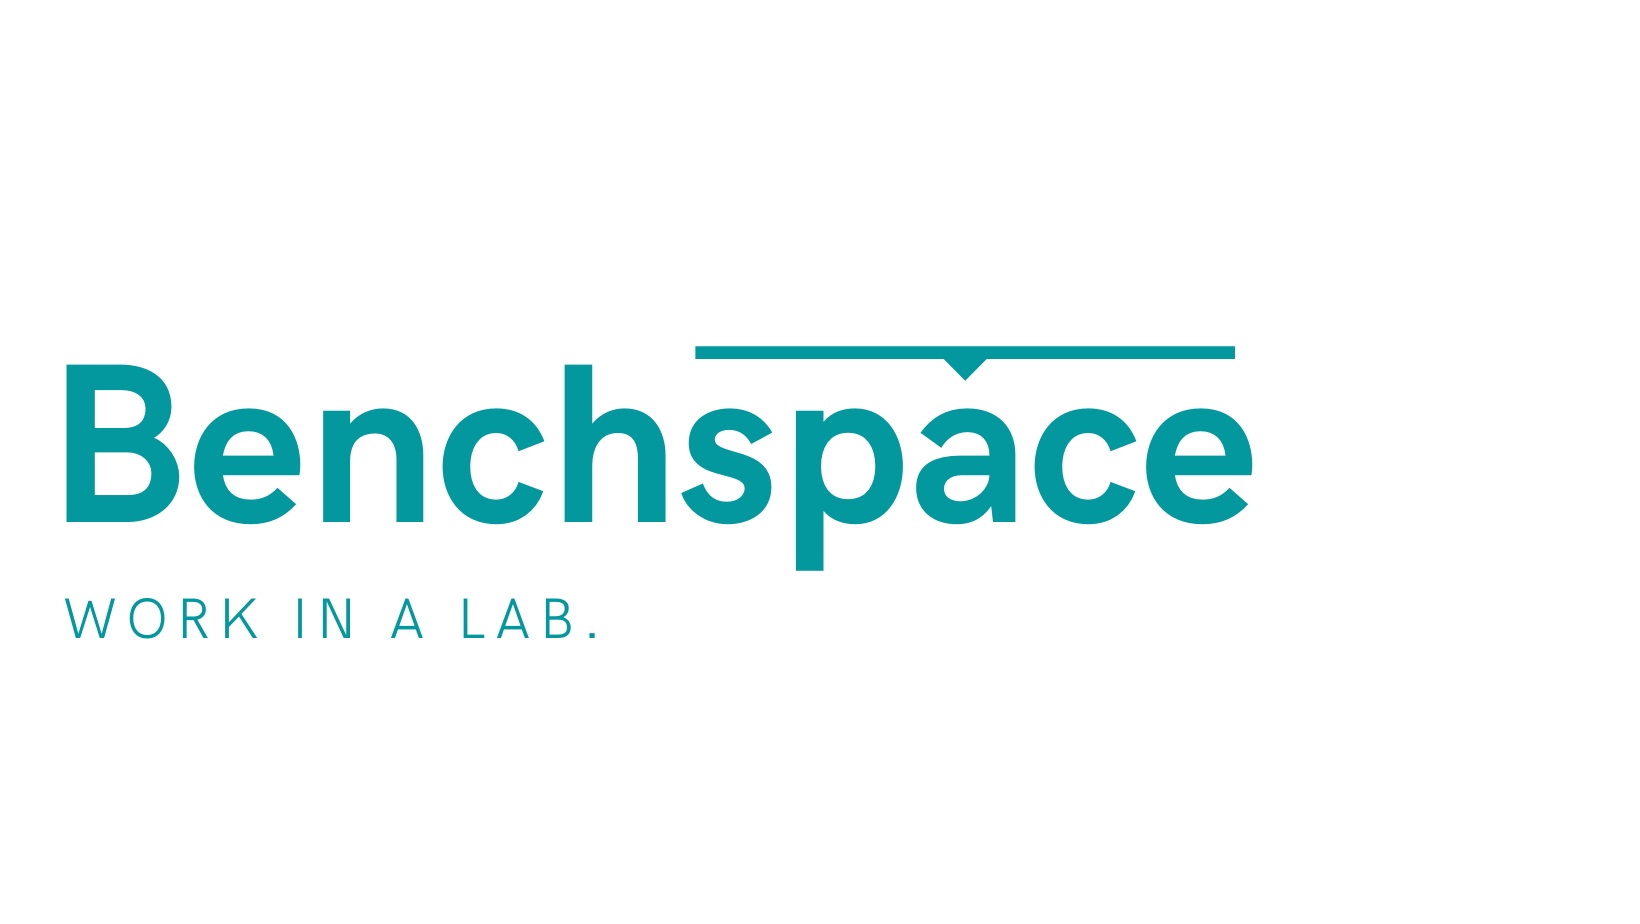 Benchspace